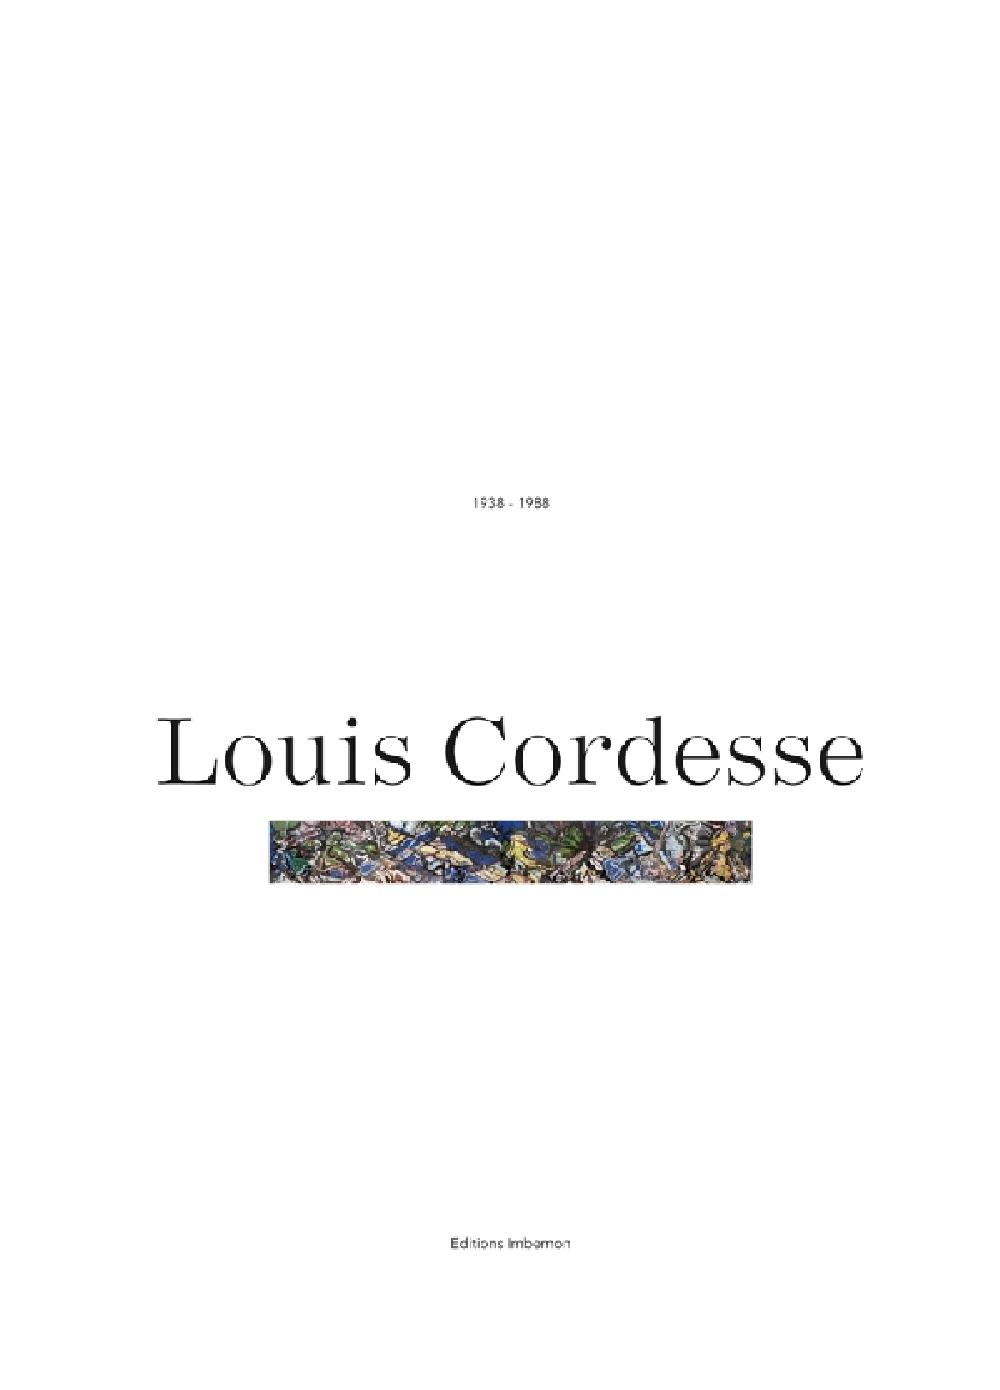 Louis Cordesse 1938-1988